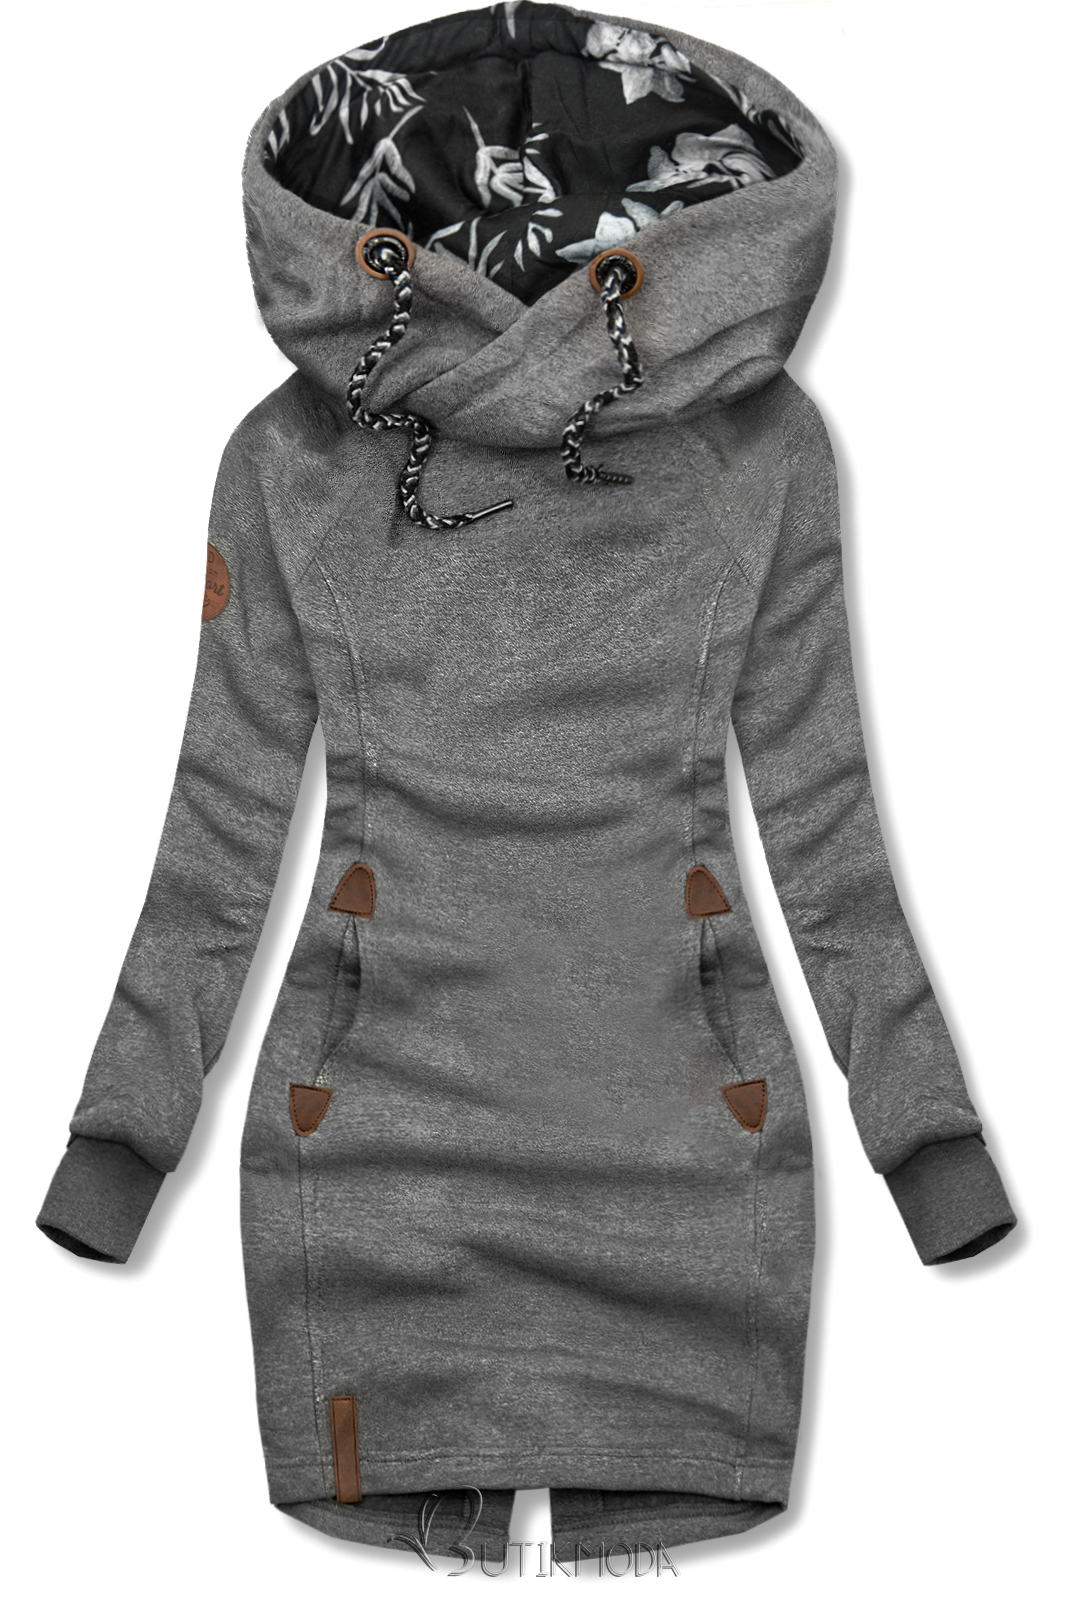 dress with hoodie dark gray